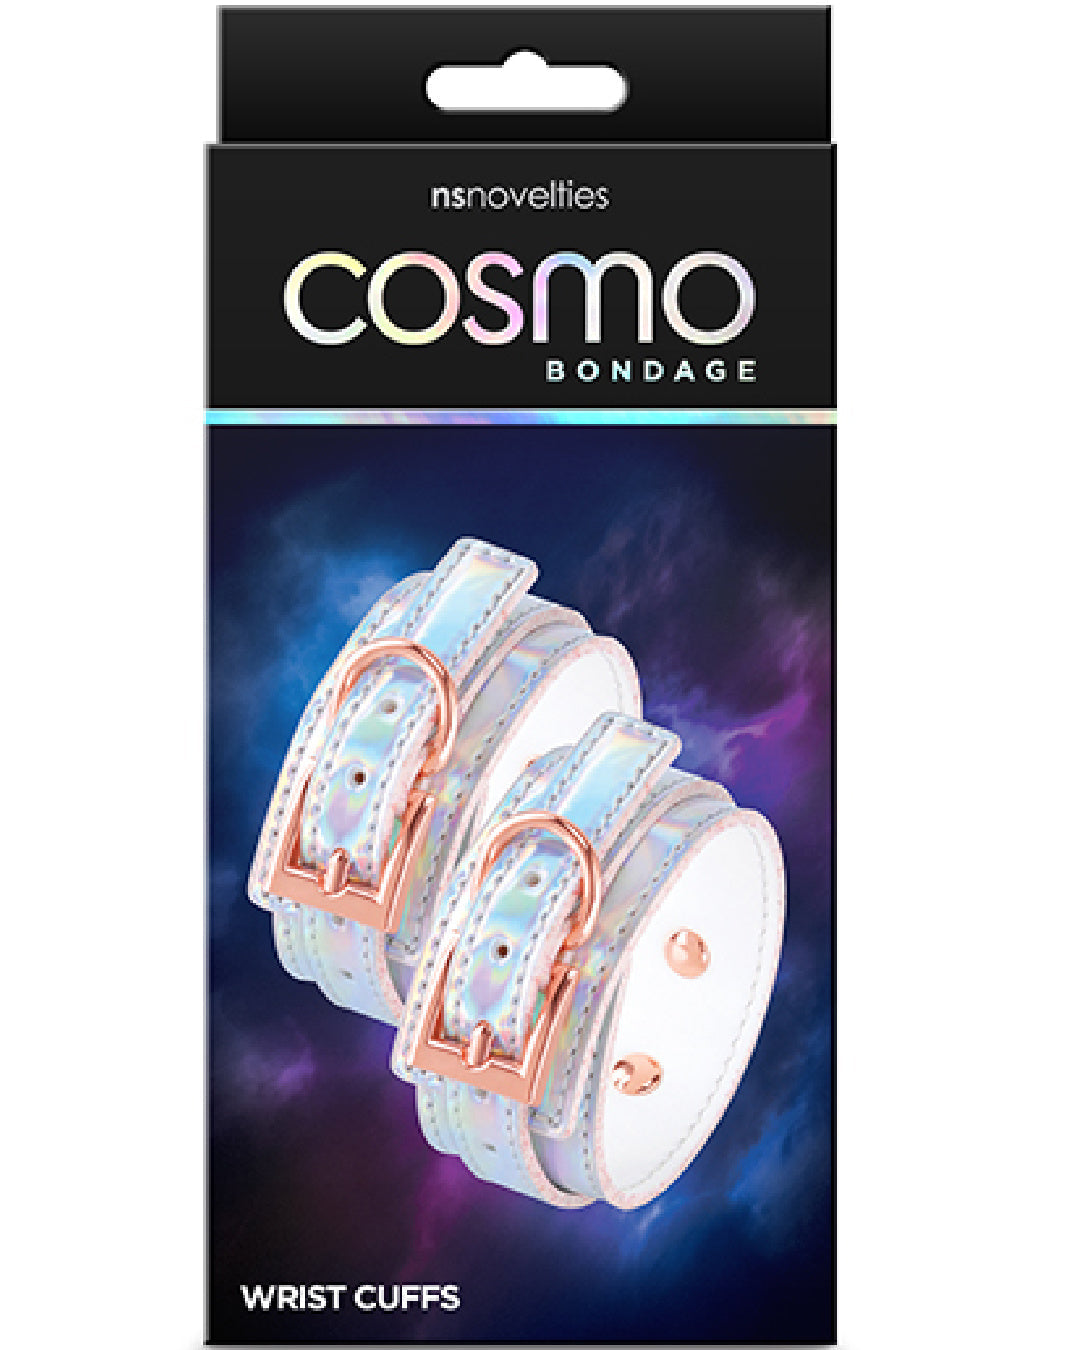 Cosmo Bondage Holographic Wrist Cuffs product box 